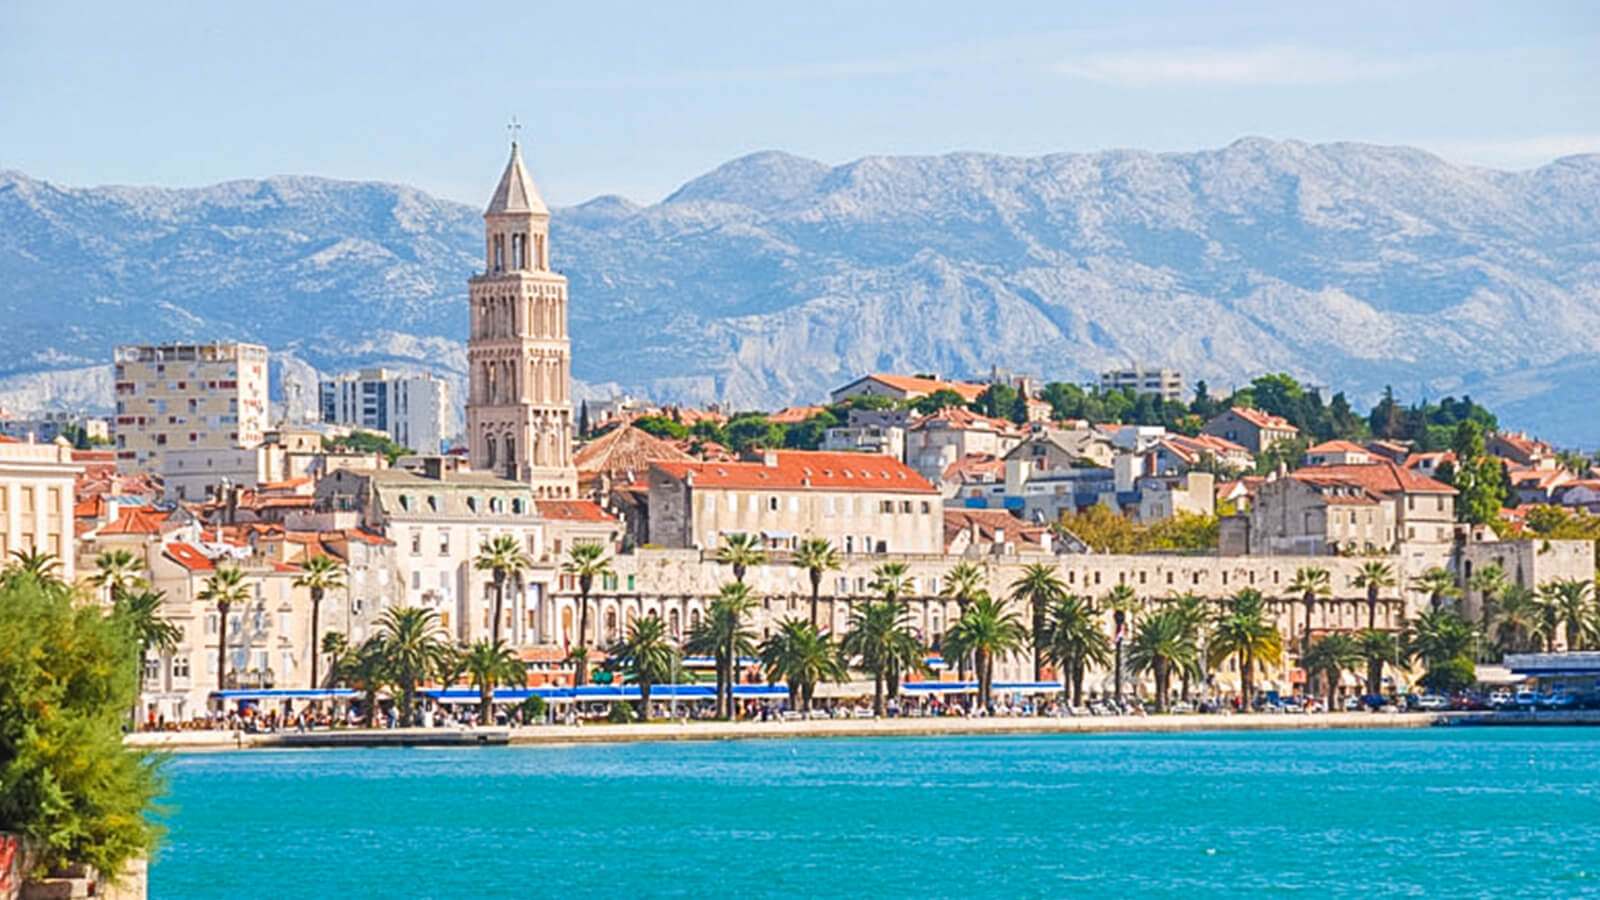 Image of Split, Croatia